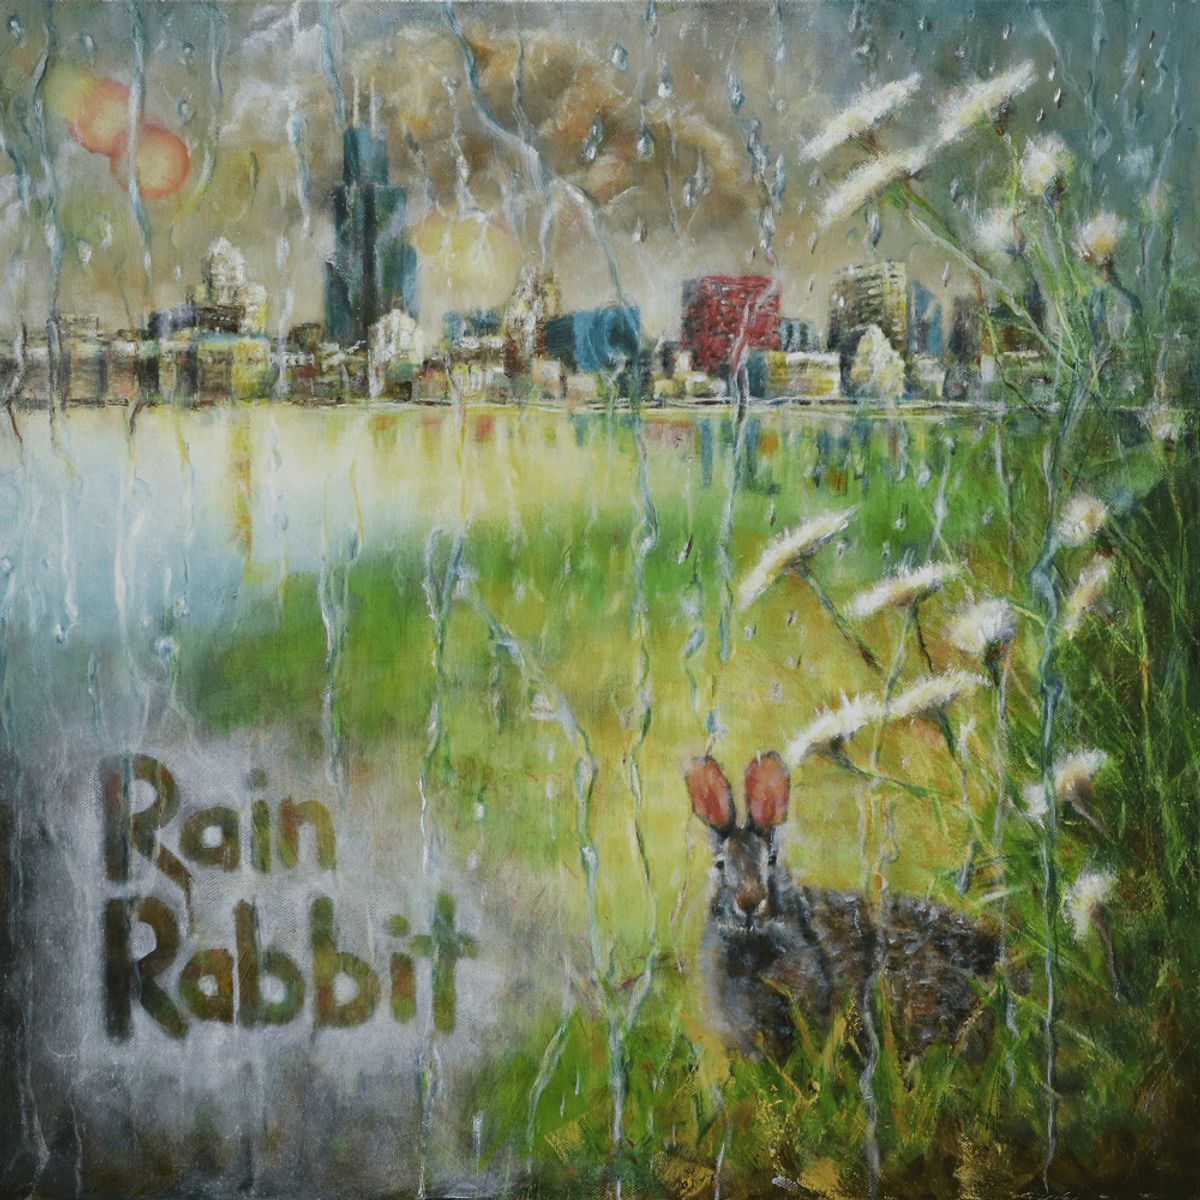 Rain Rabbit